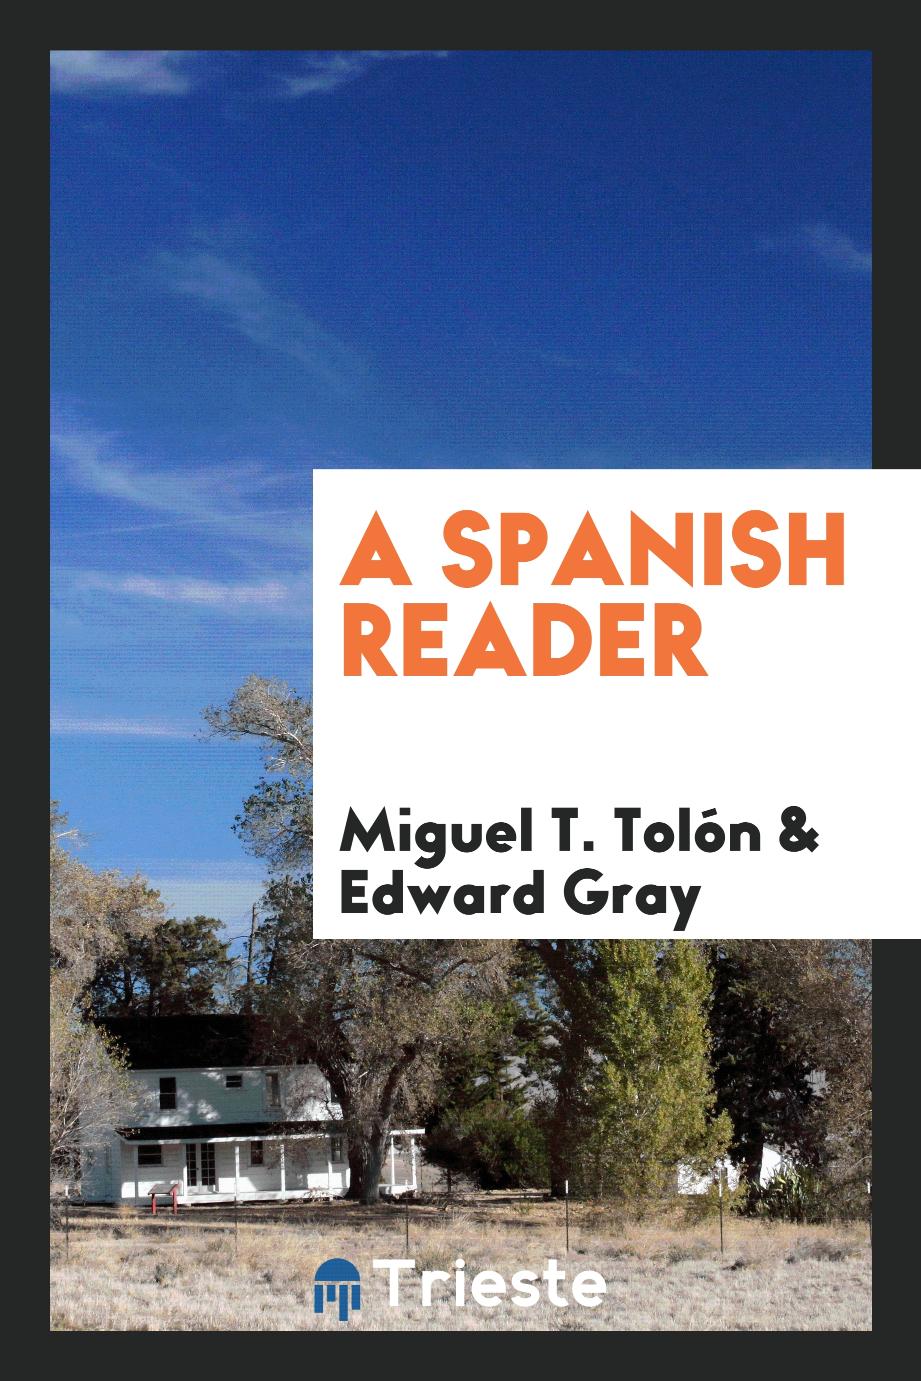 A Spanish reader